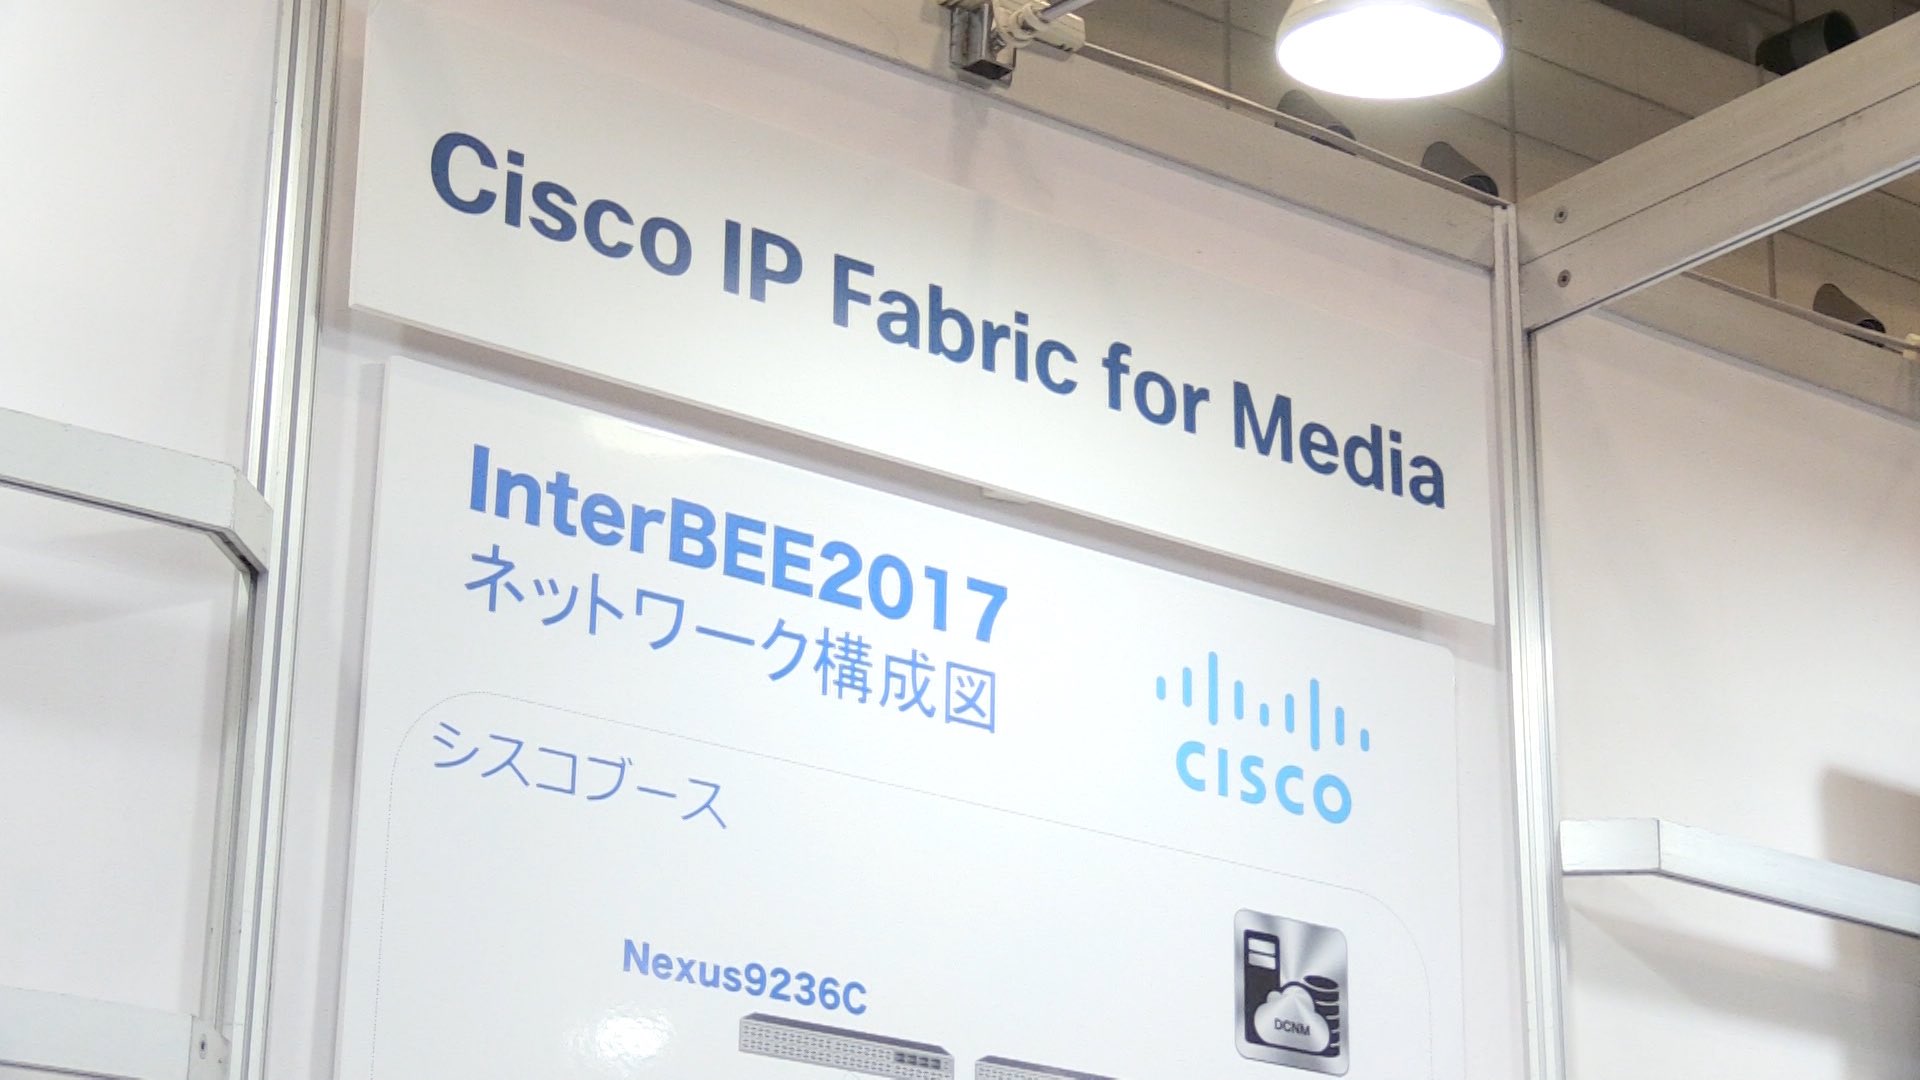 Cisco IP Fabric for Media